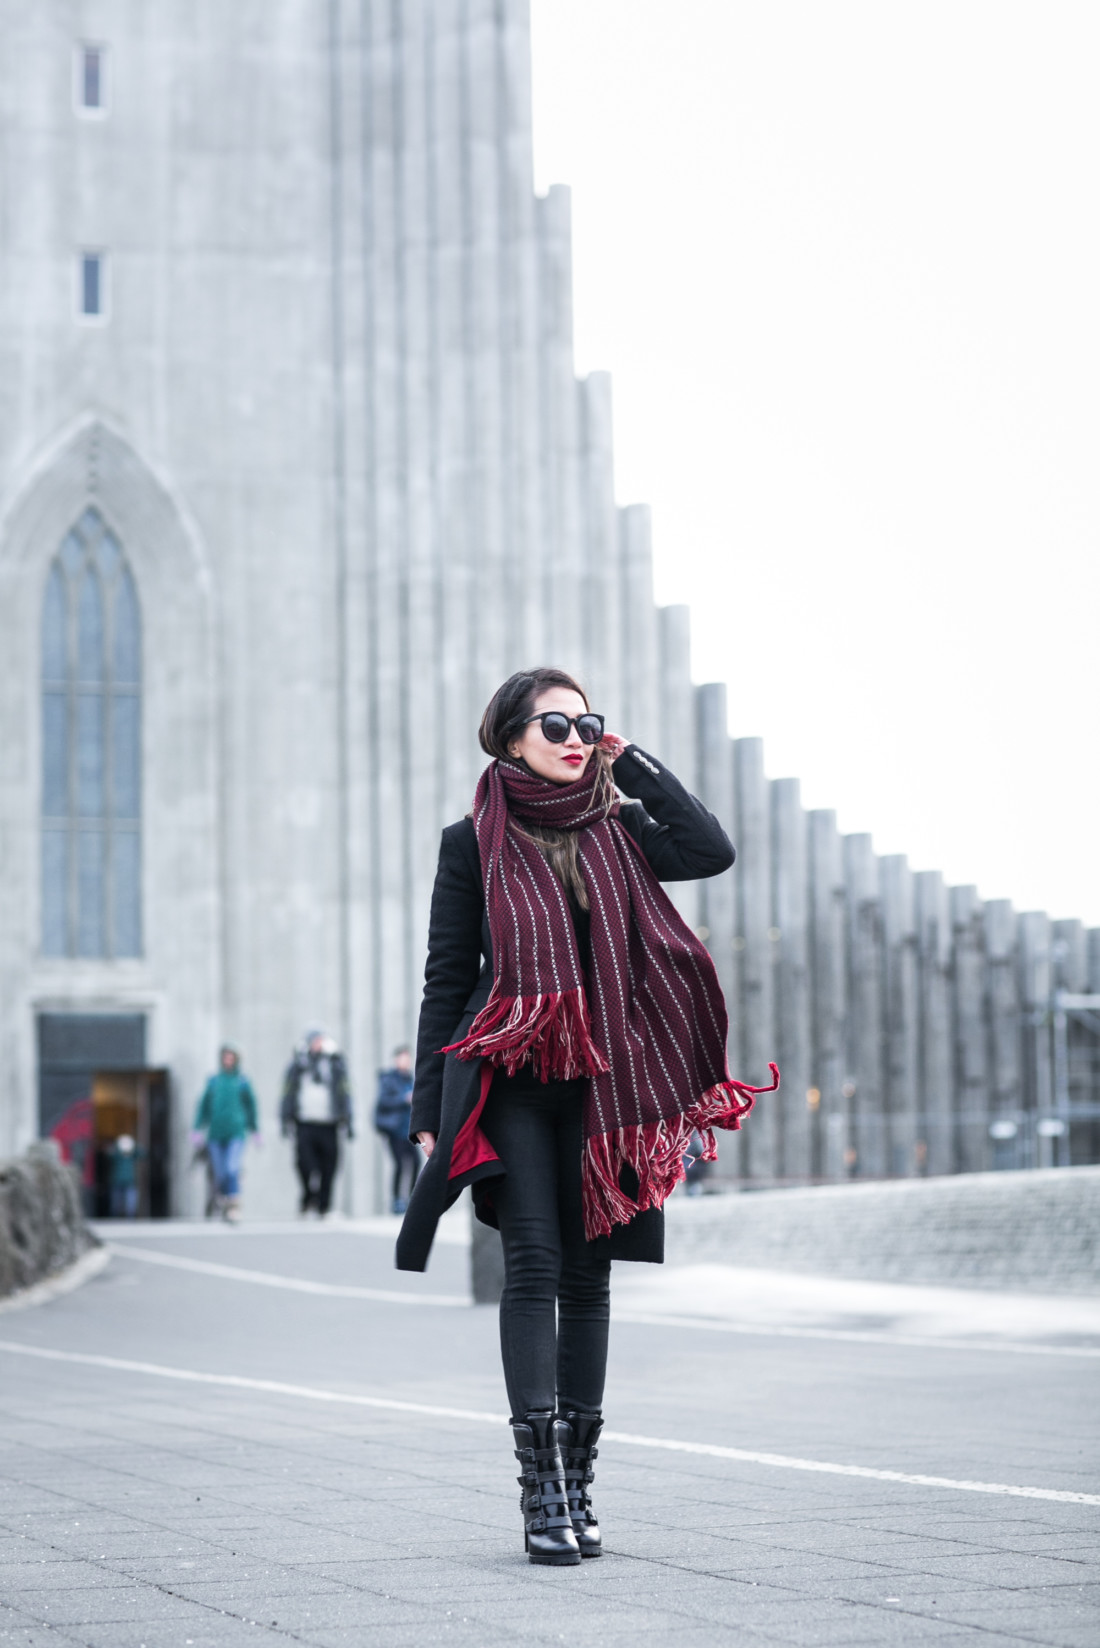 Weekend in Reykjavik :: Winter coat & Structured bag - Wendy's